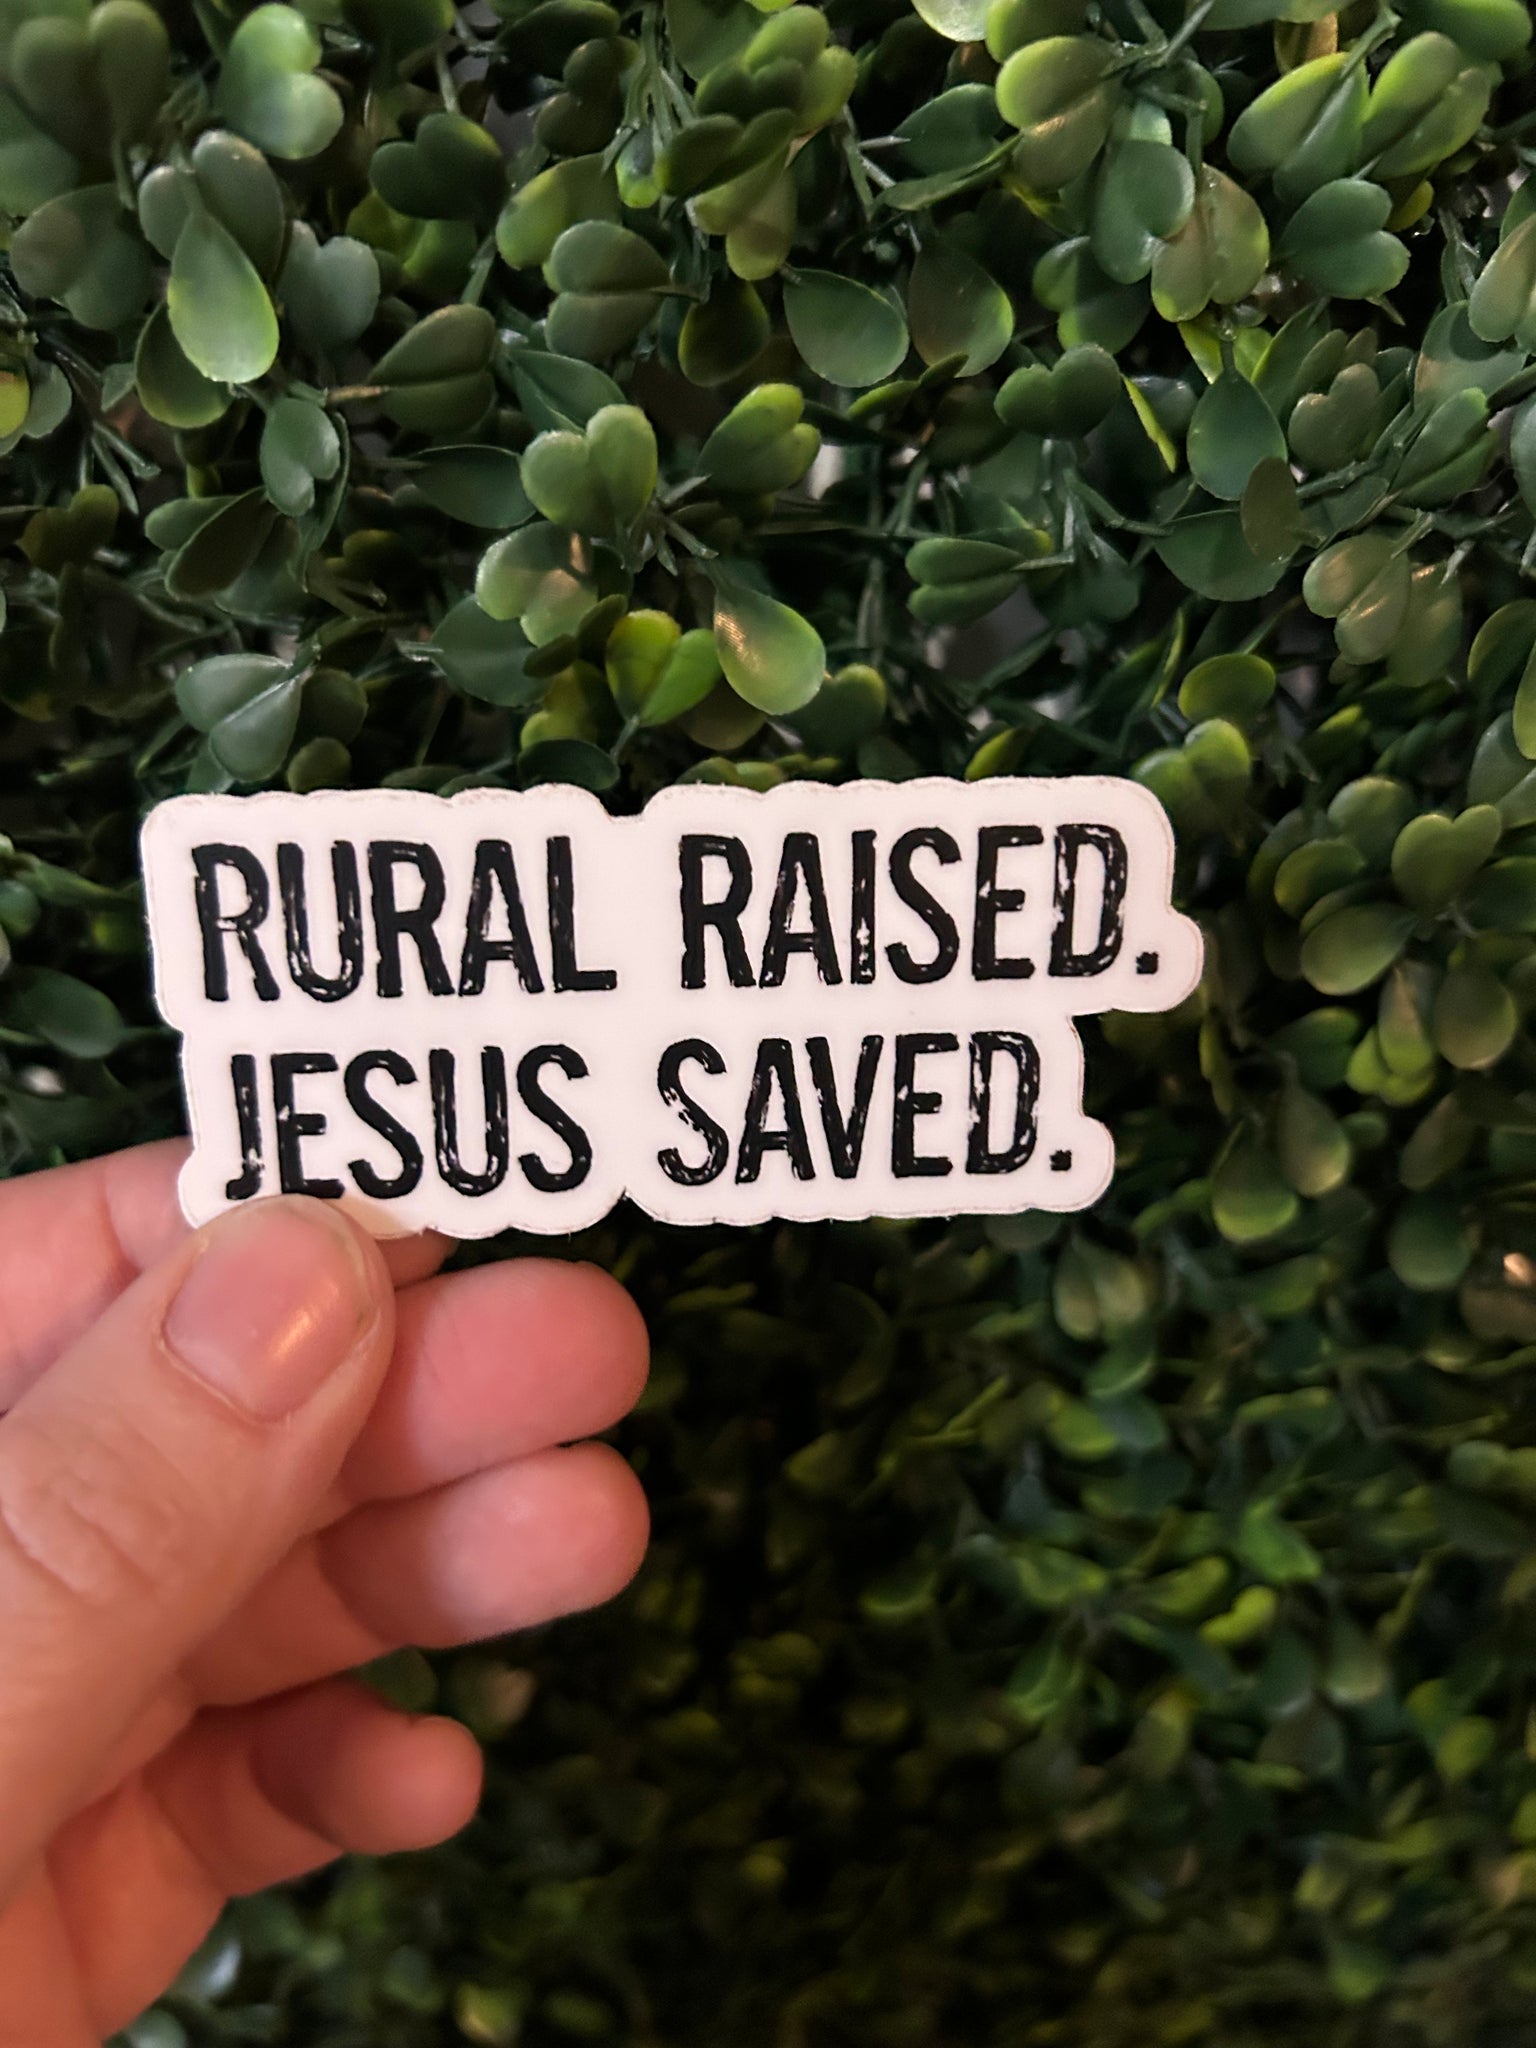 Rural Raised. Jesus Saved.